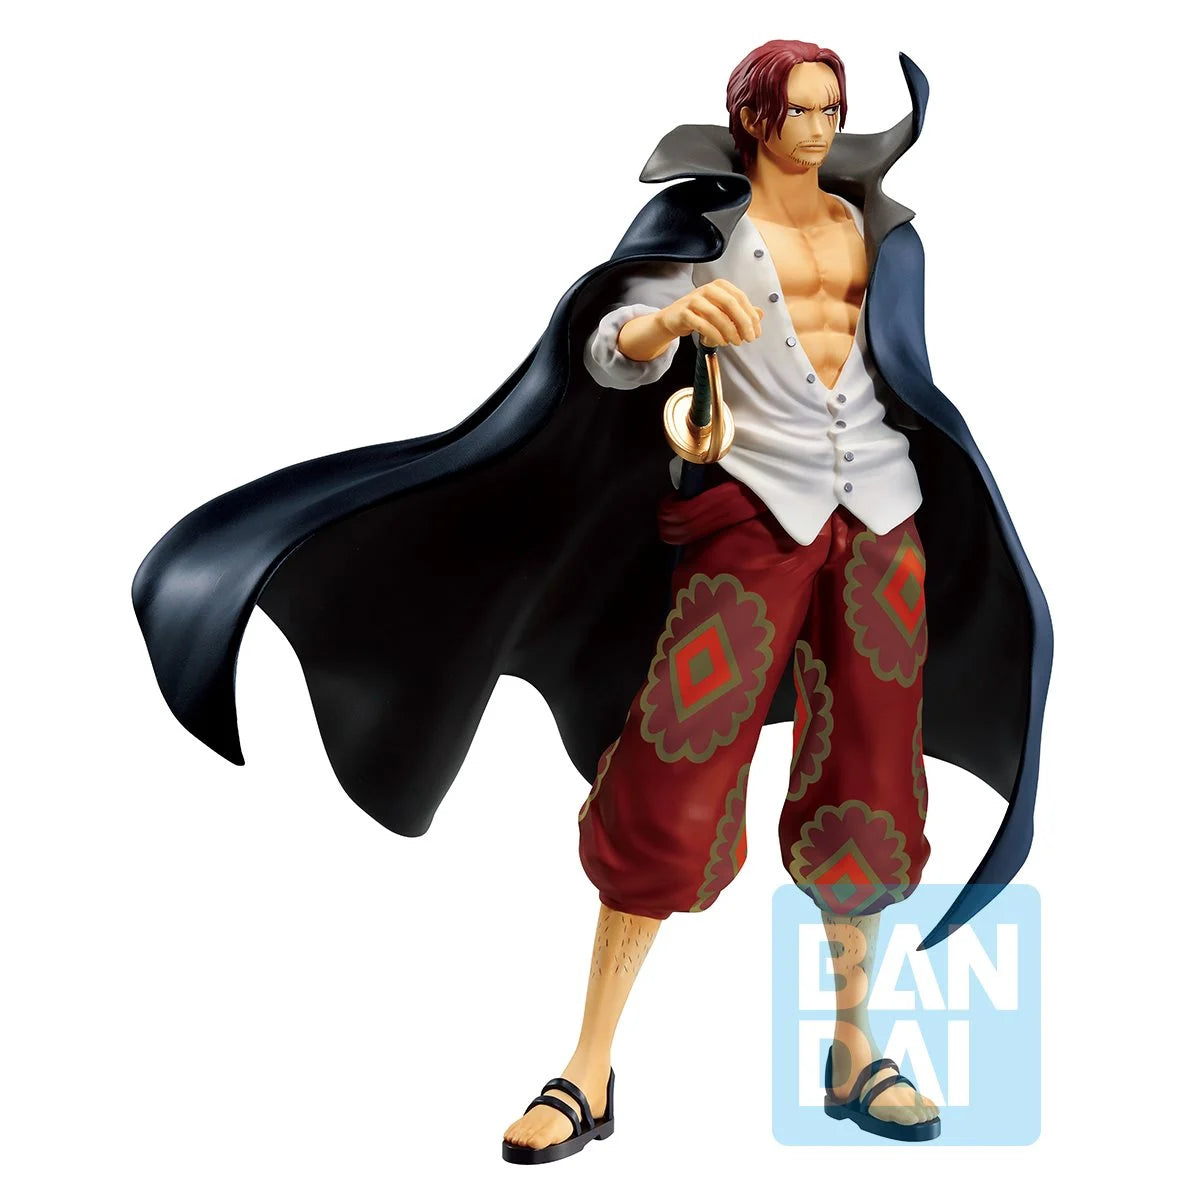 Bandai Tamashii Nations: One Piece The Movie Red - Shanks Estatua de Ichiban